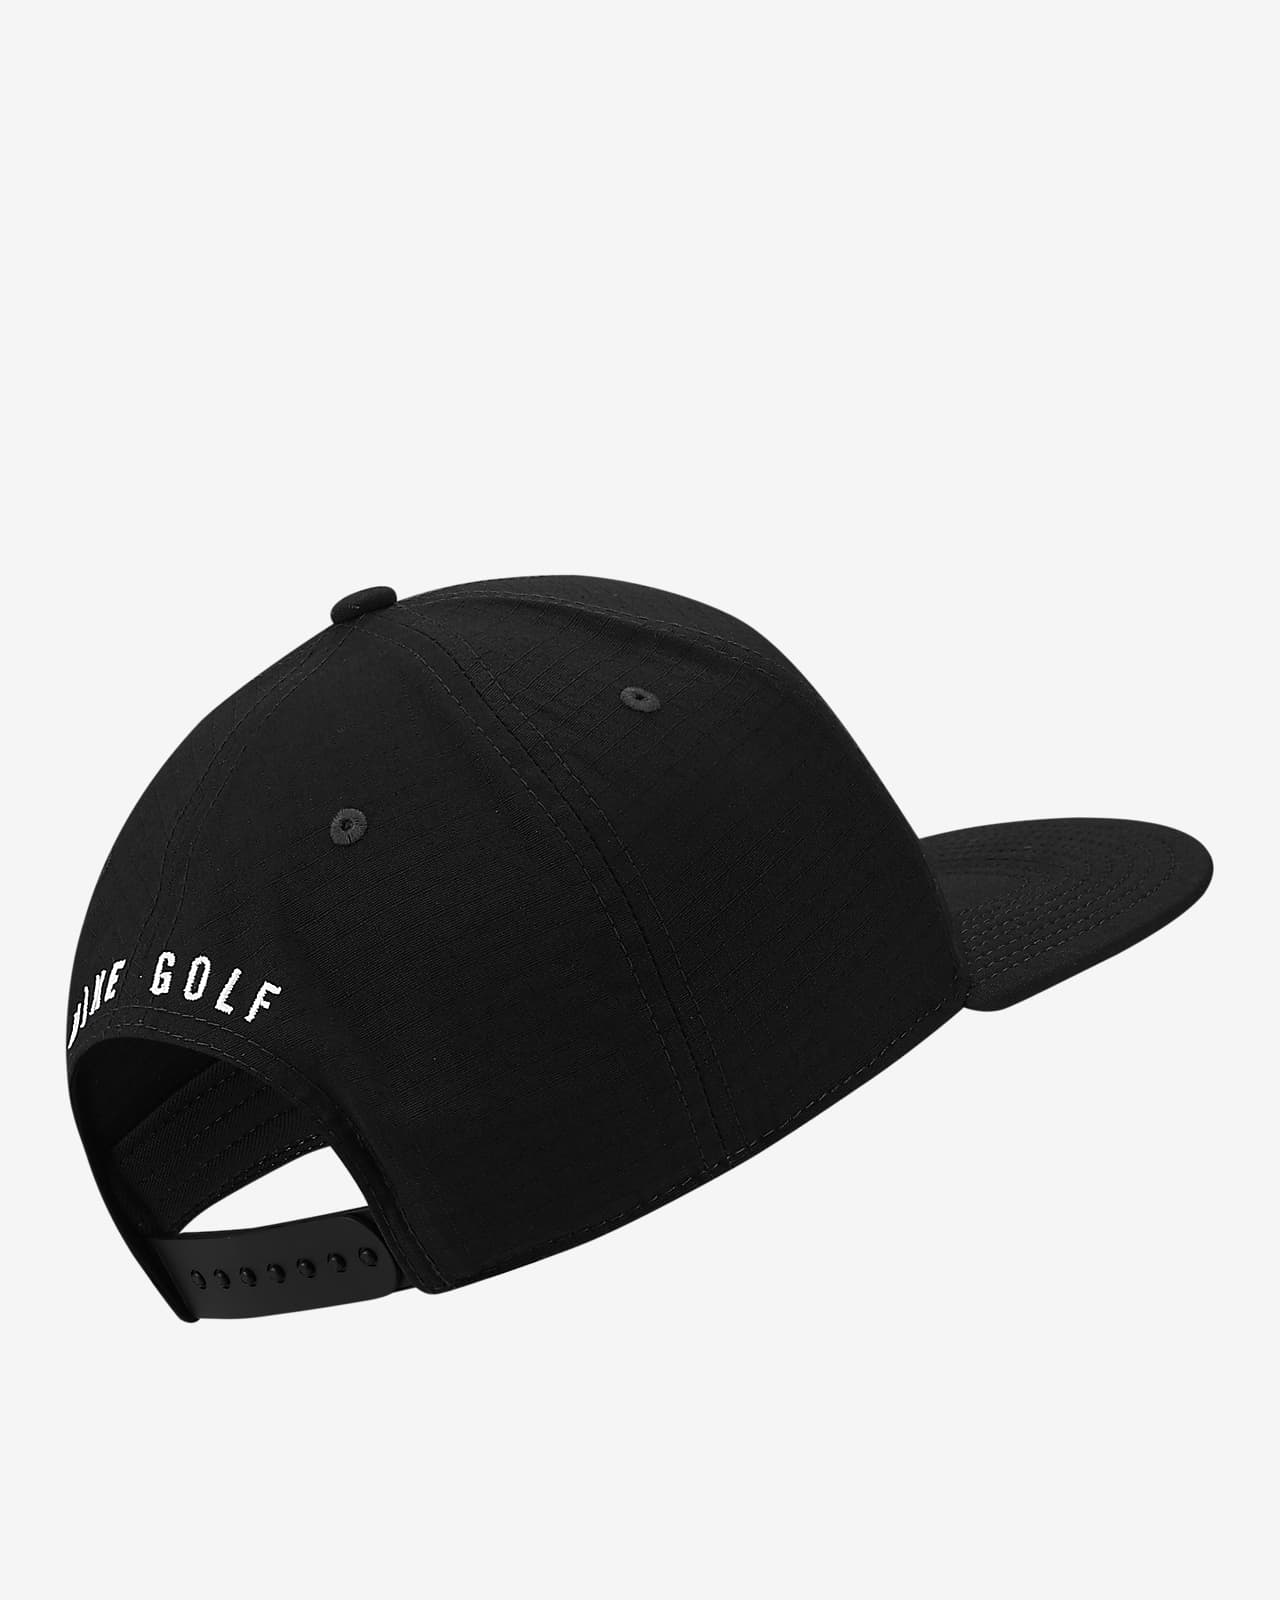 new nike golf hats 2020